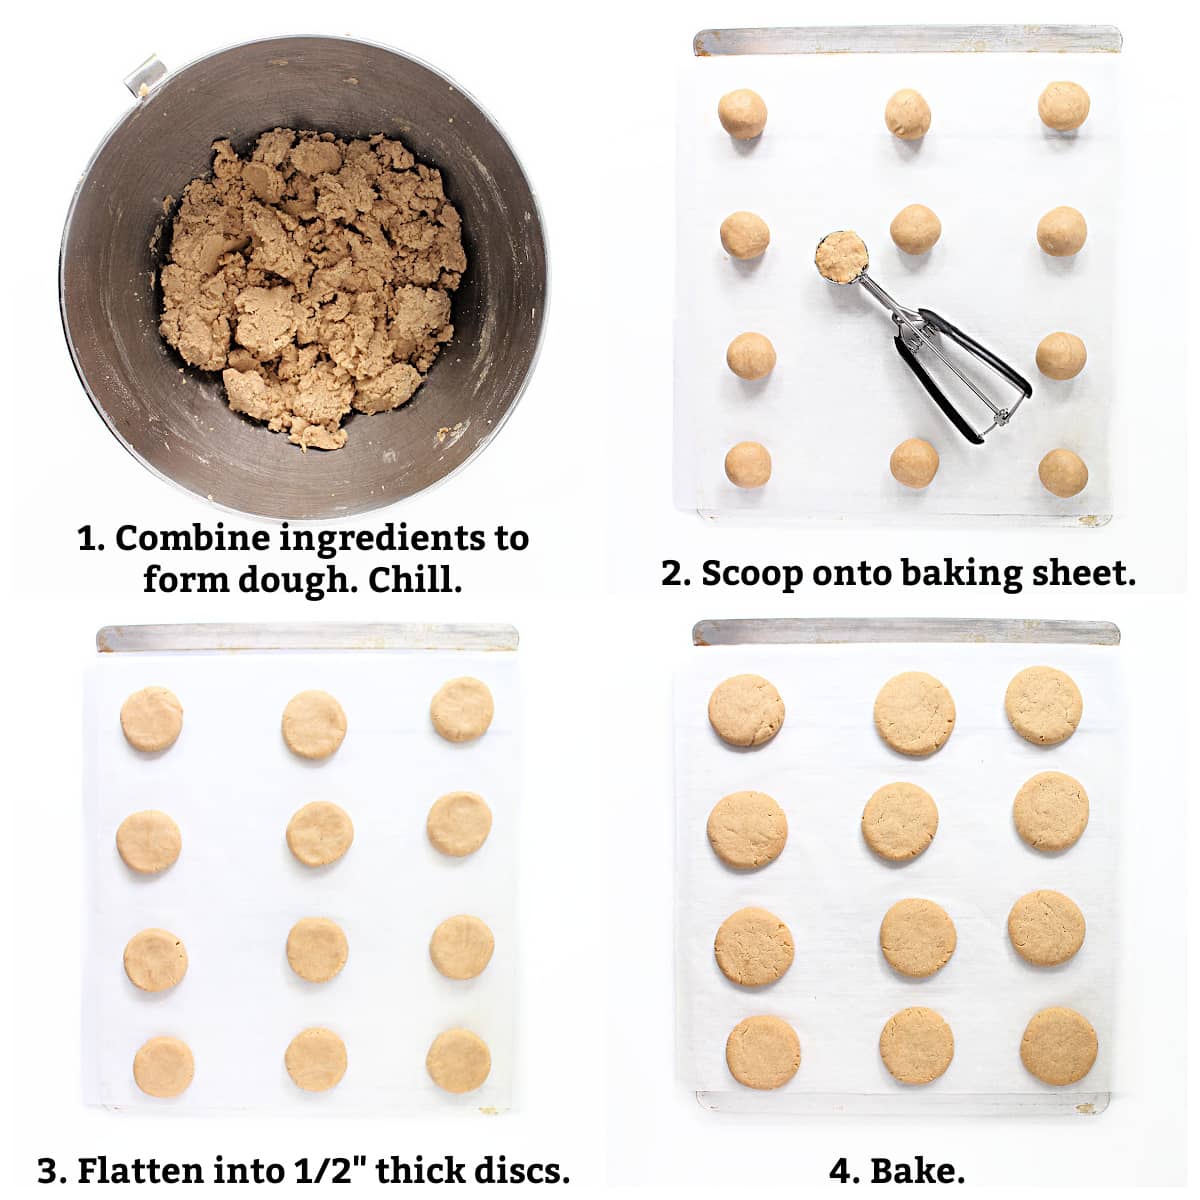 Cookie instructions; form dough, chill, scoop dough balls onto baking sheet, flatten balls into discs, bake.